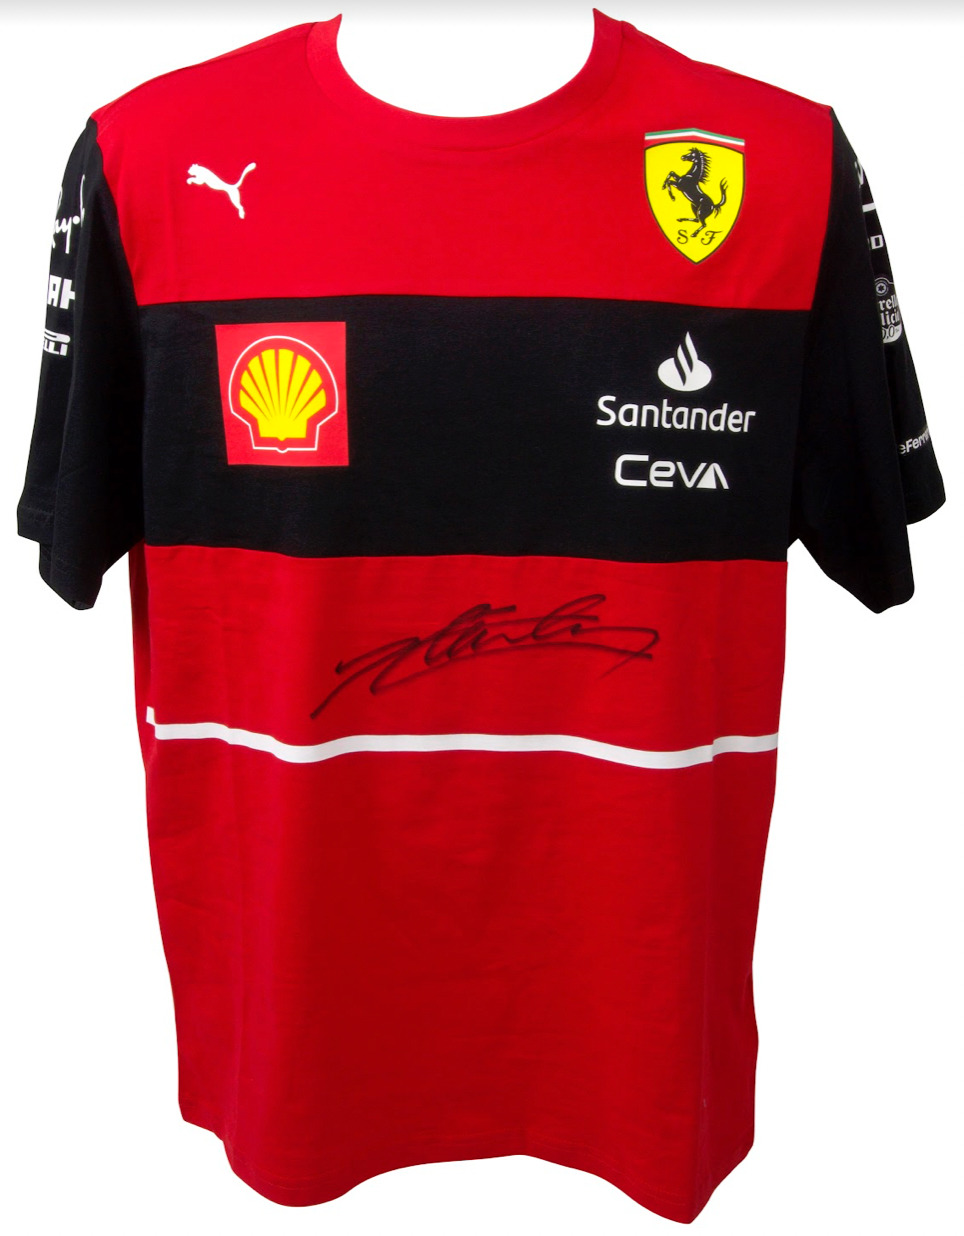 Charles Leclerc Signed Formula 1 Ferrari Red Racing T-shirt #16 - Beckett COA